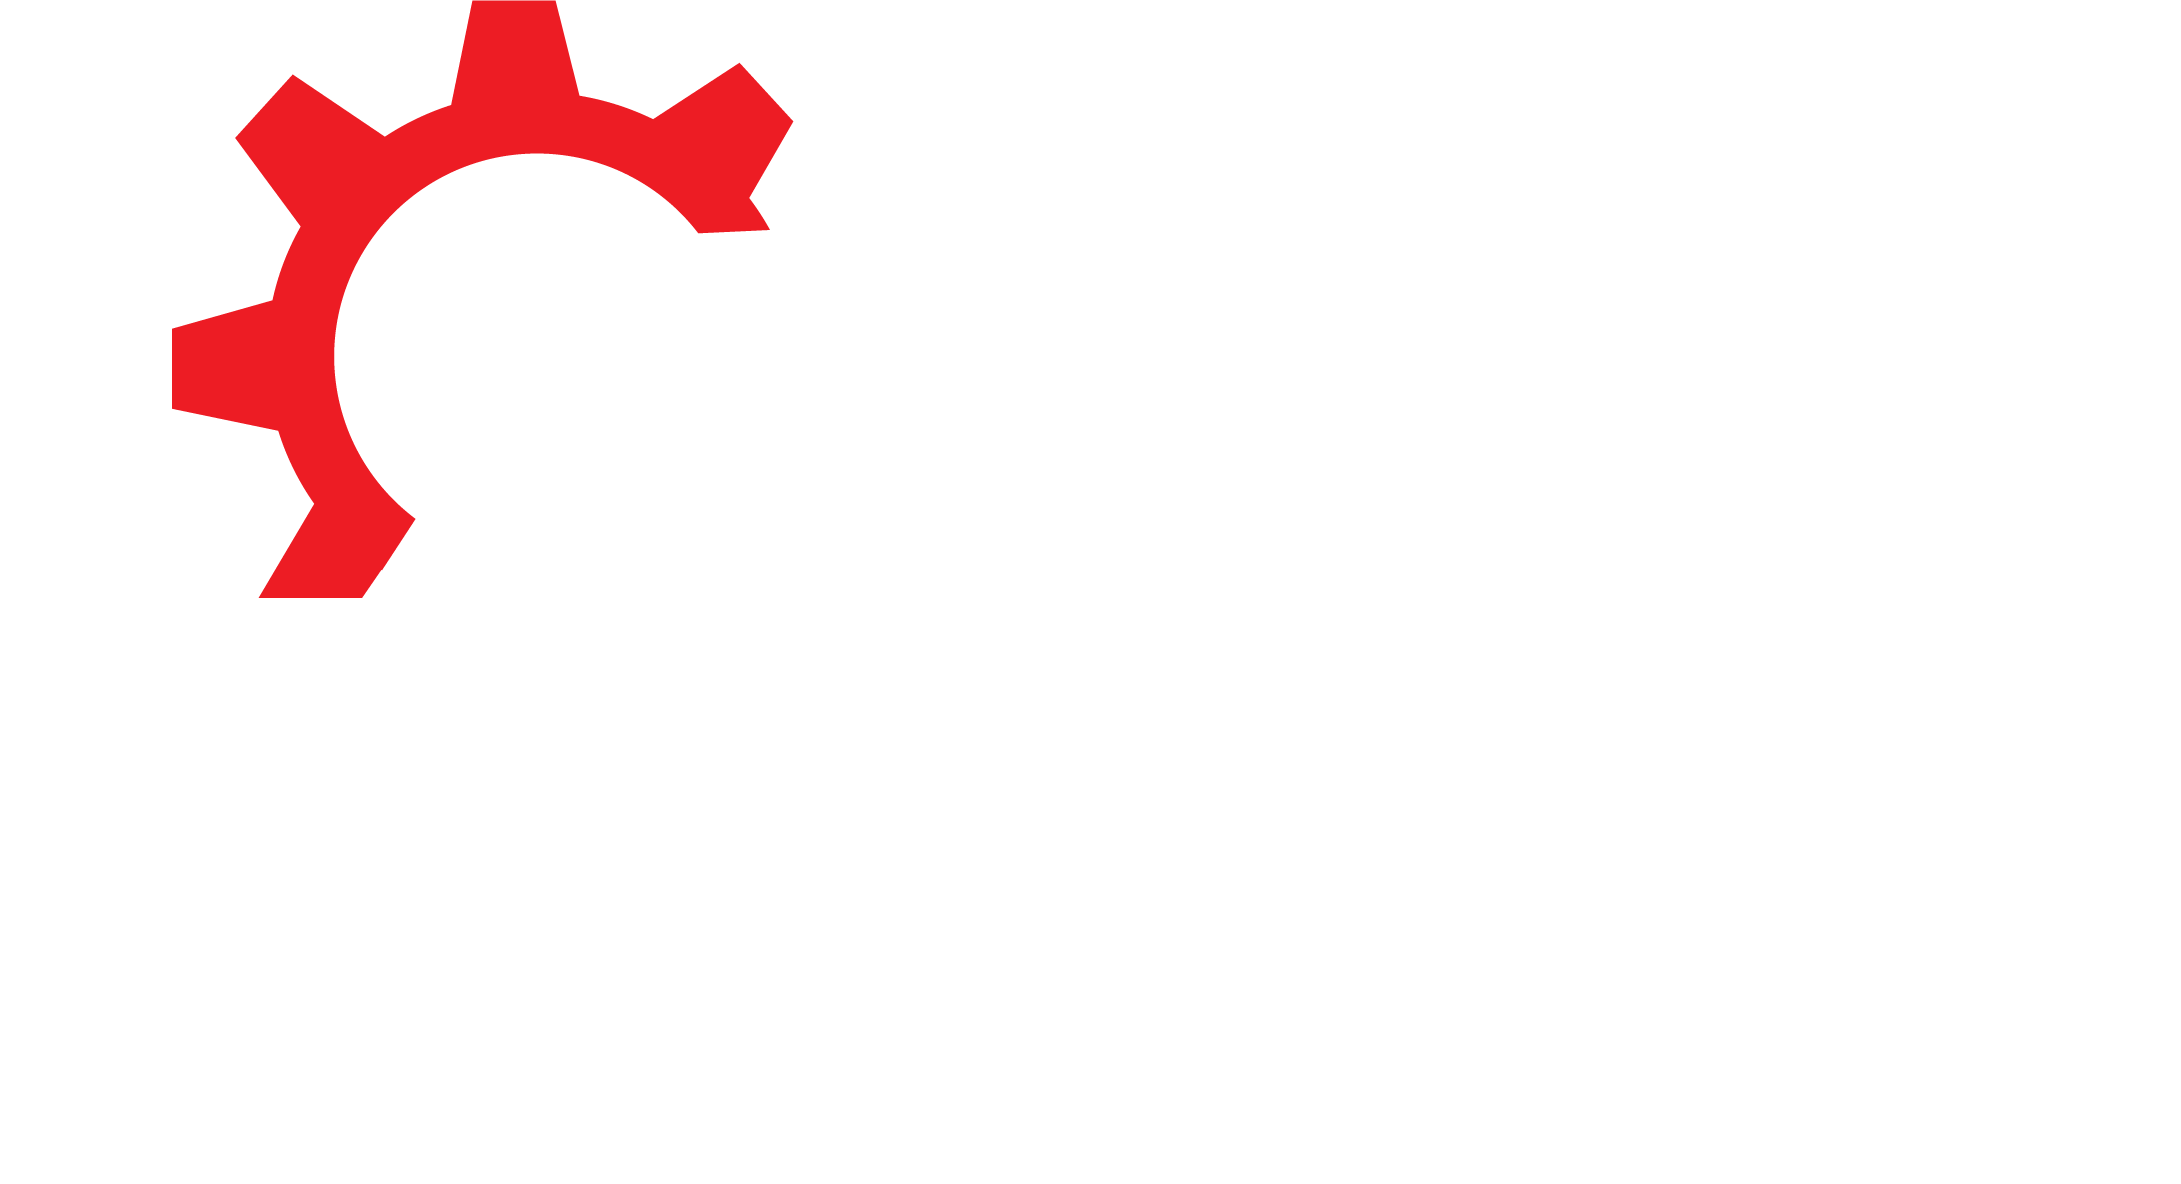 FSD Robotics, a Radwell company